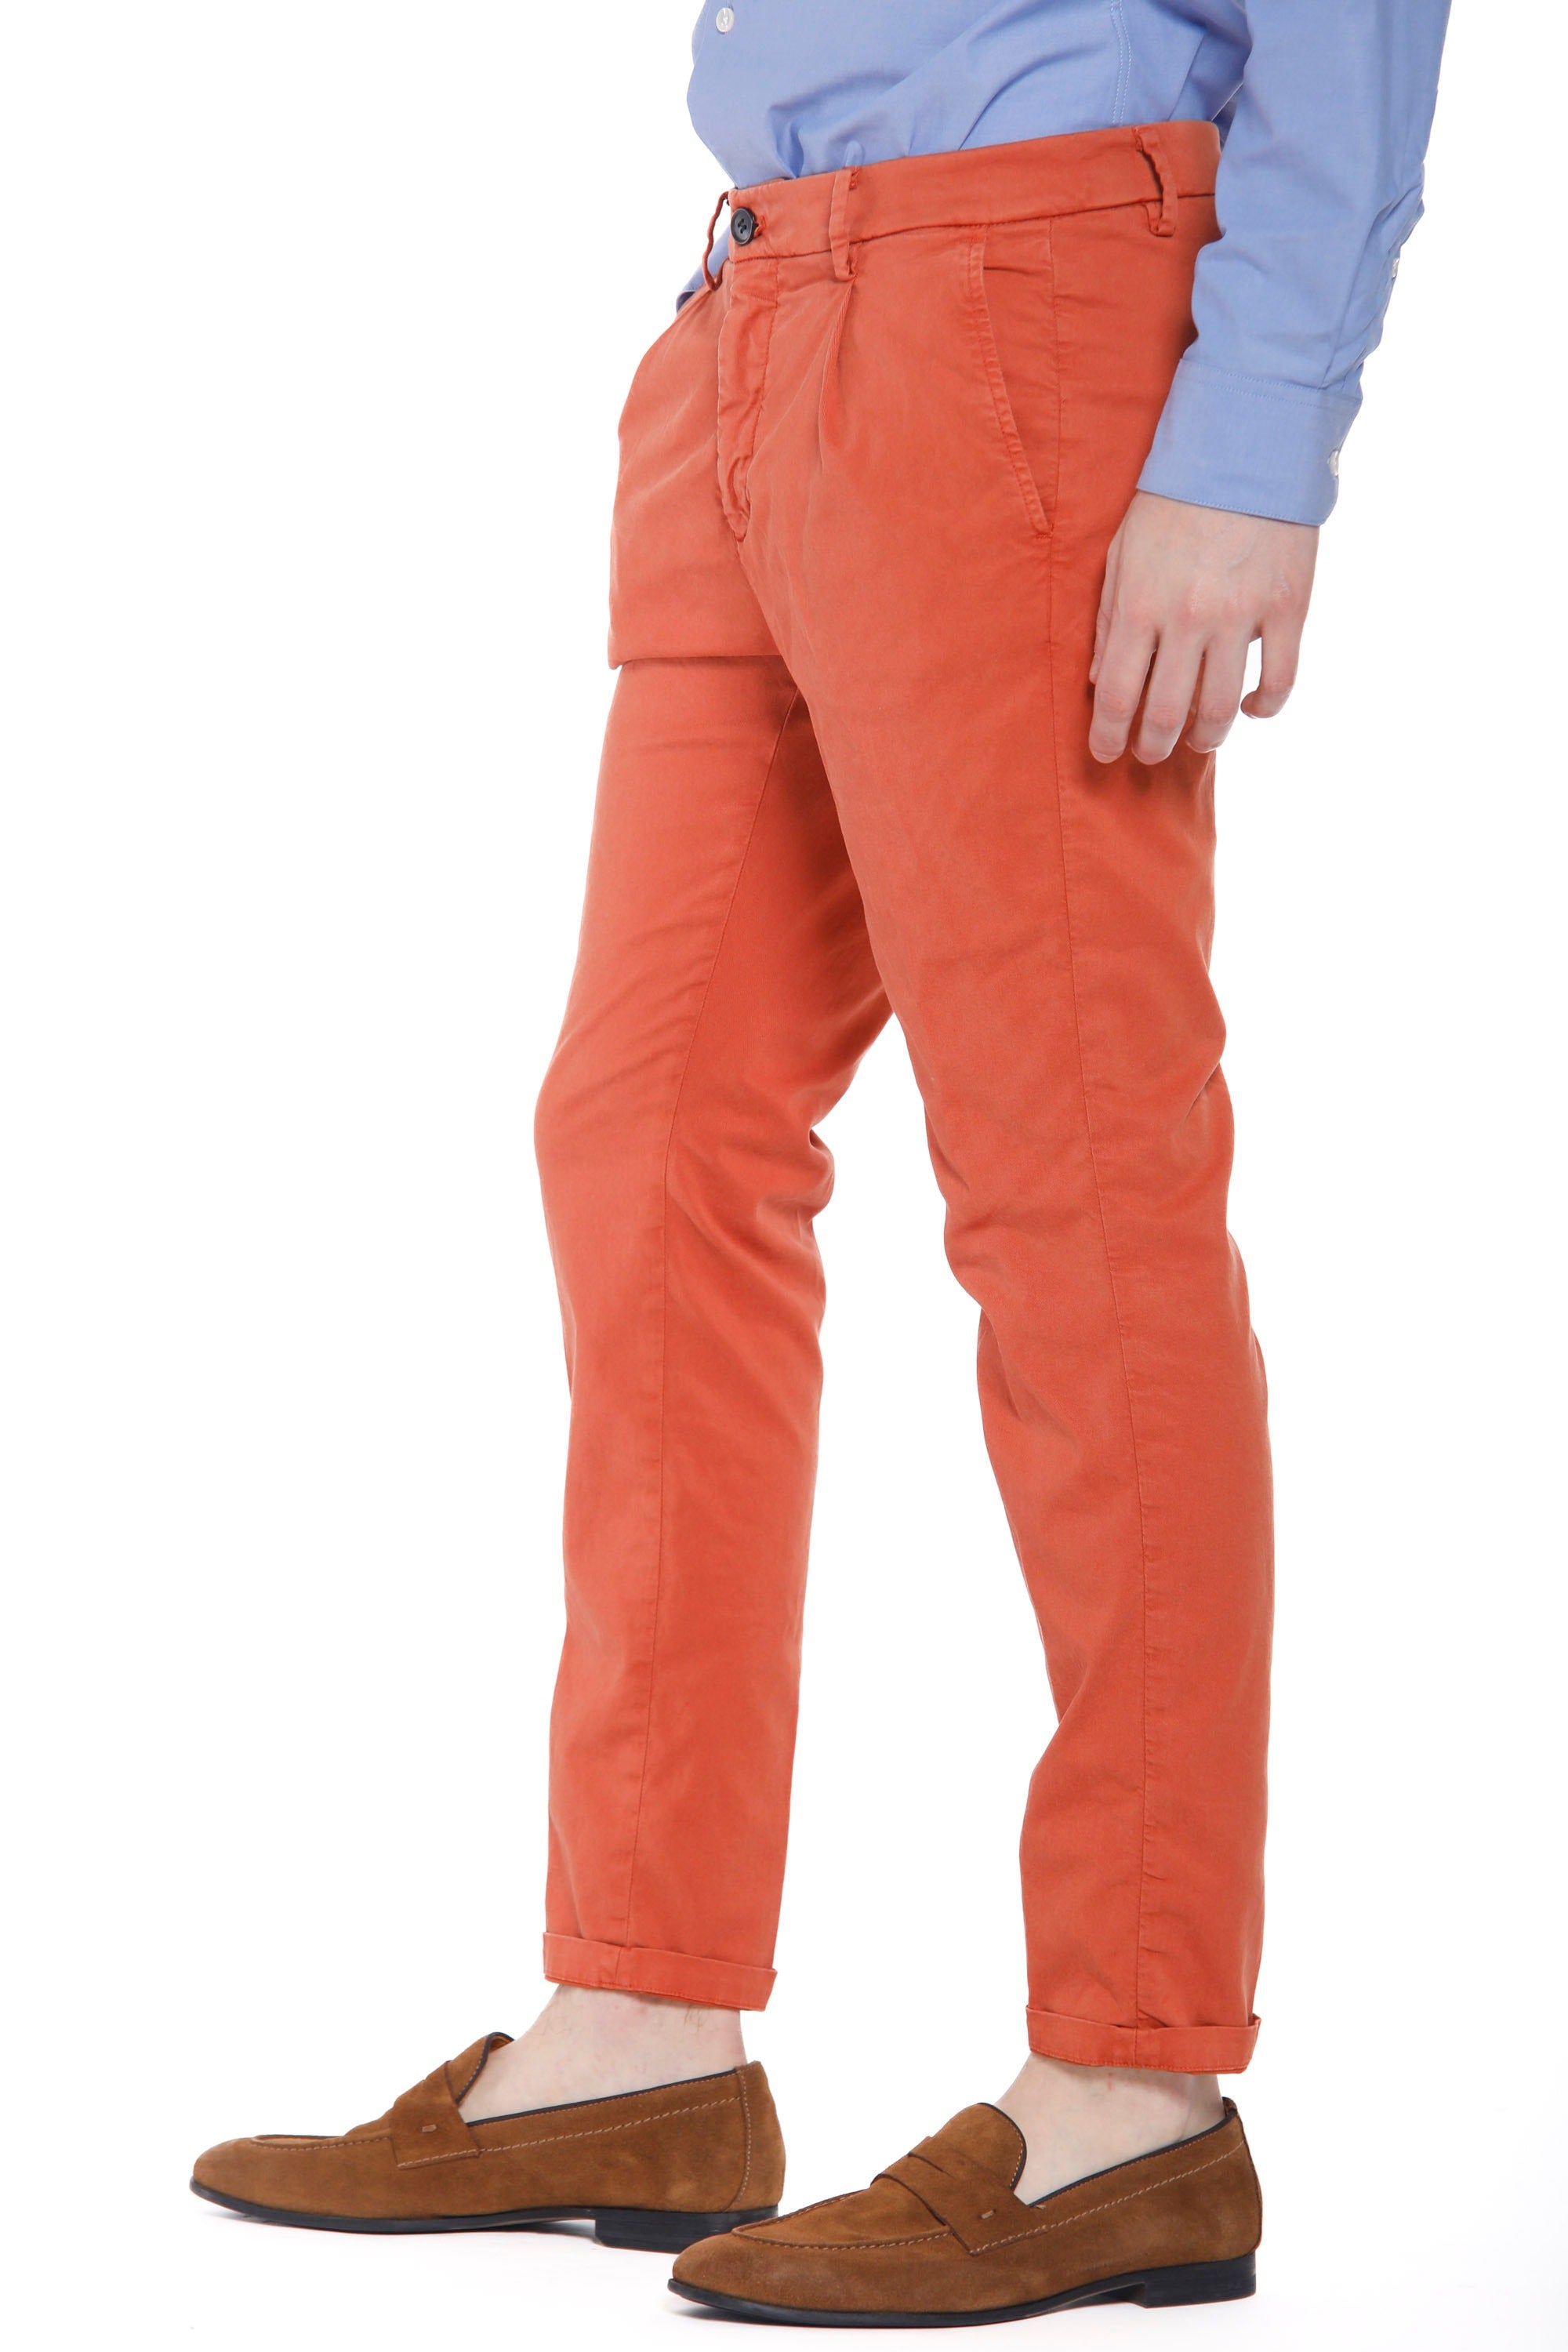 Osaka 1 Pinces pantalone chino uomo in cotone e tencel carrot fit